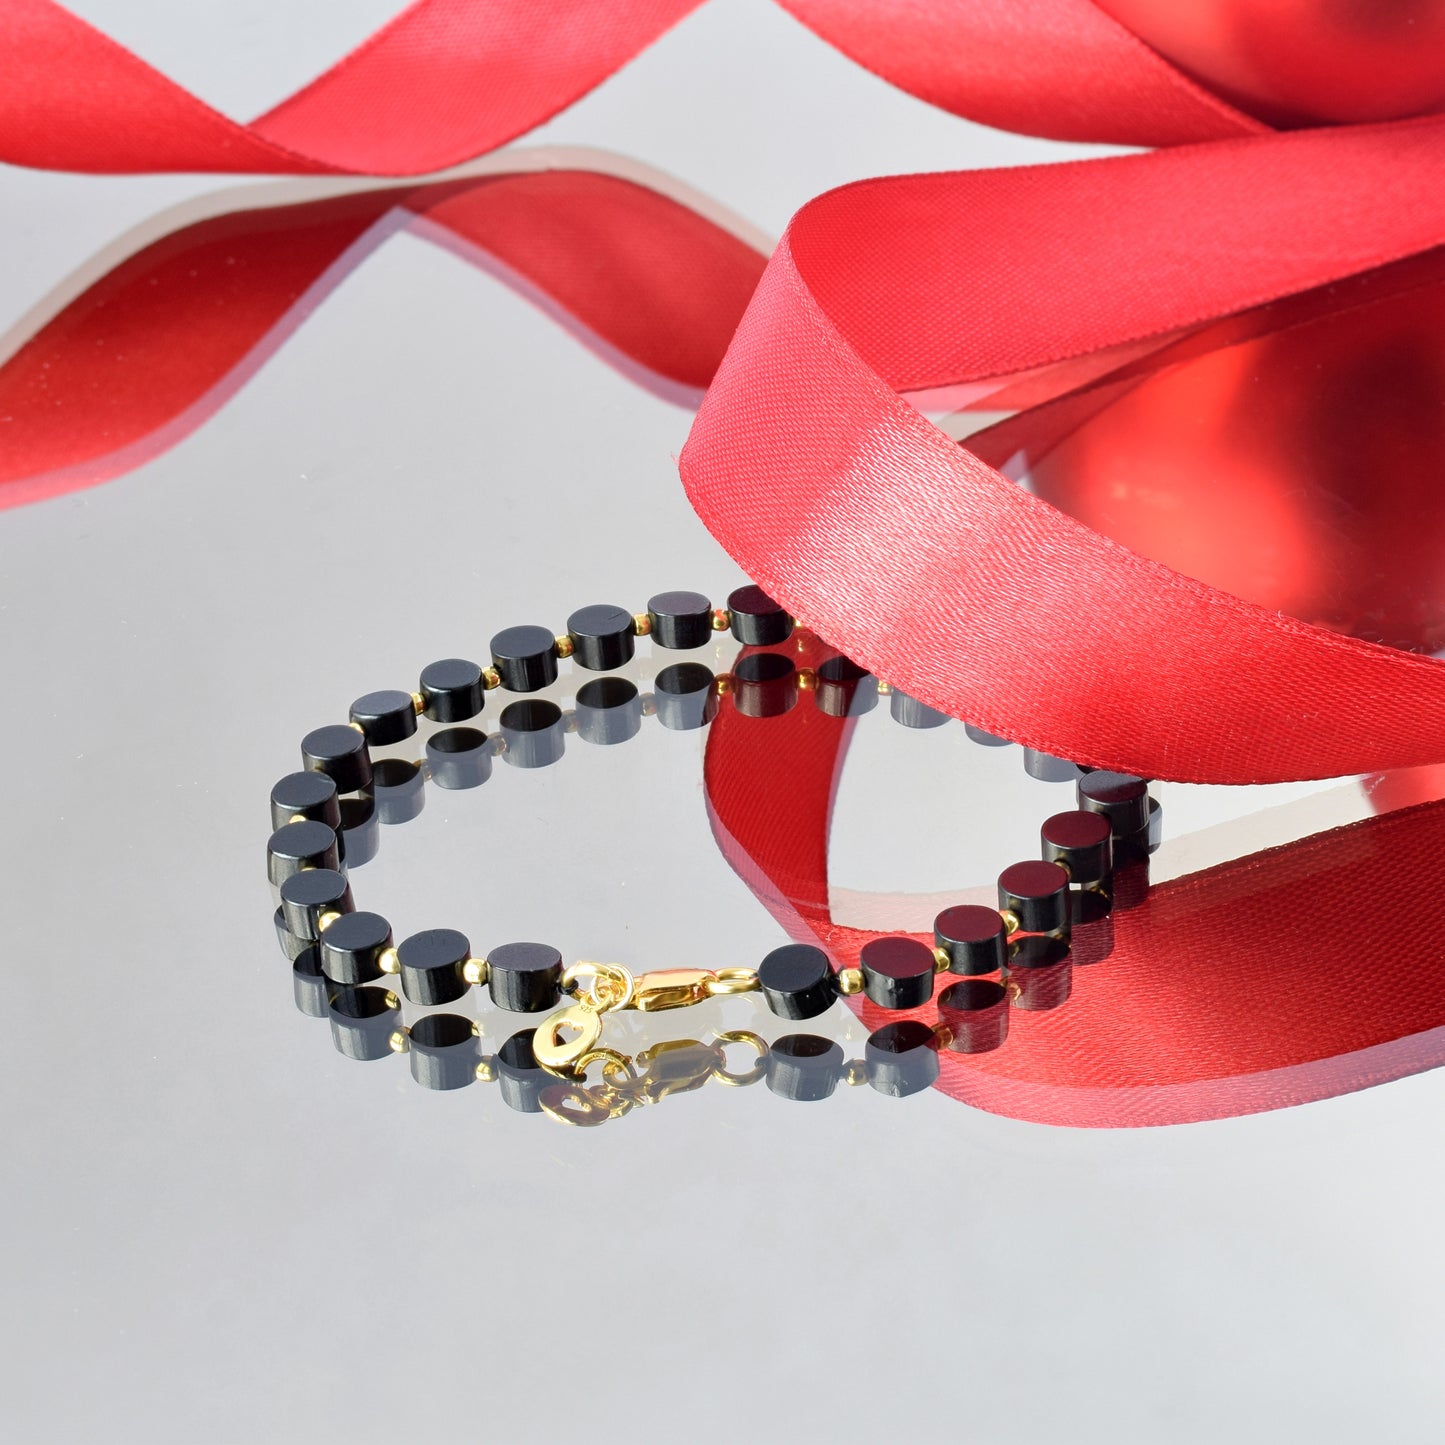 Black Amber Tablet Beads Bracelet: Stylish Soft Elegance